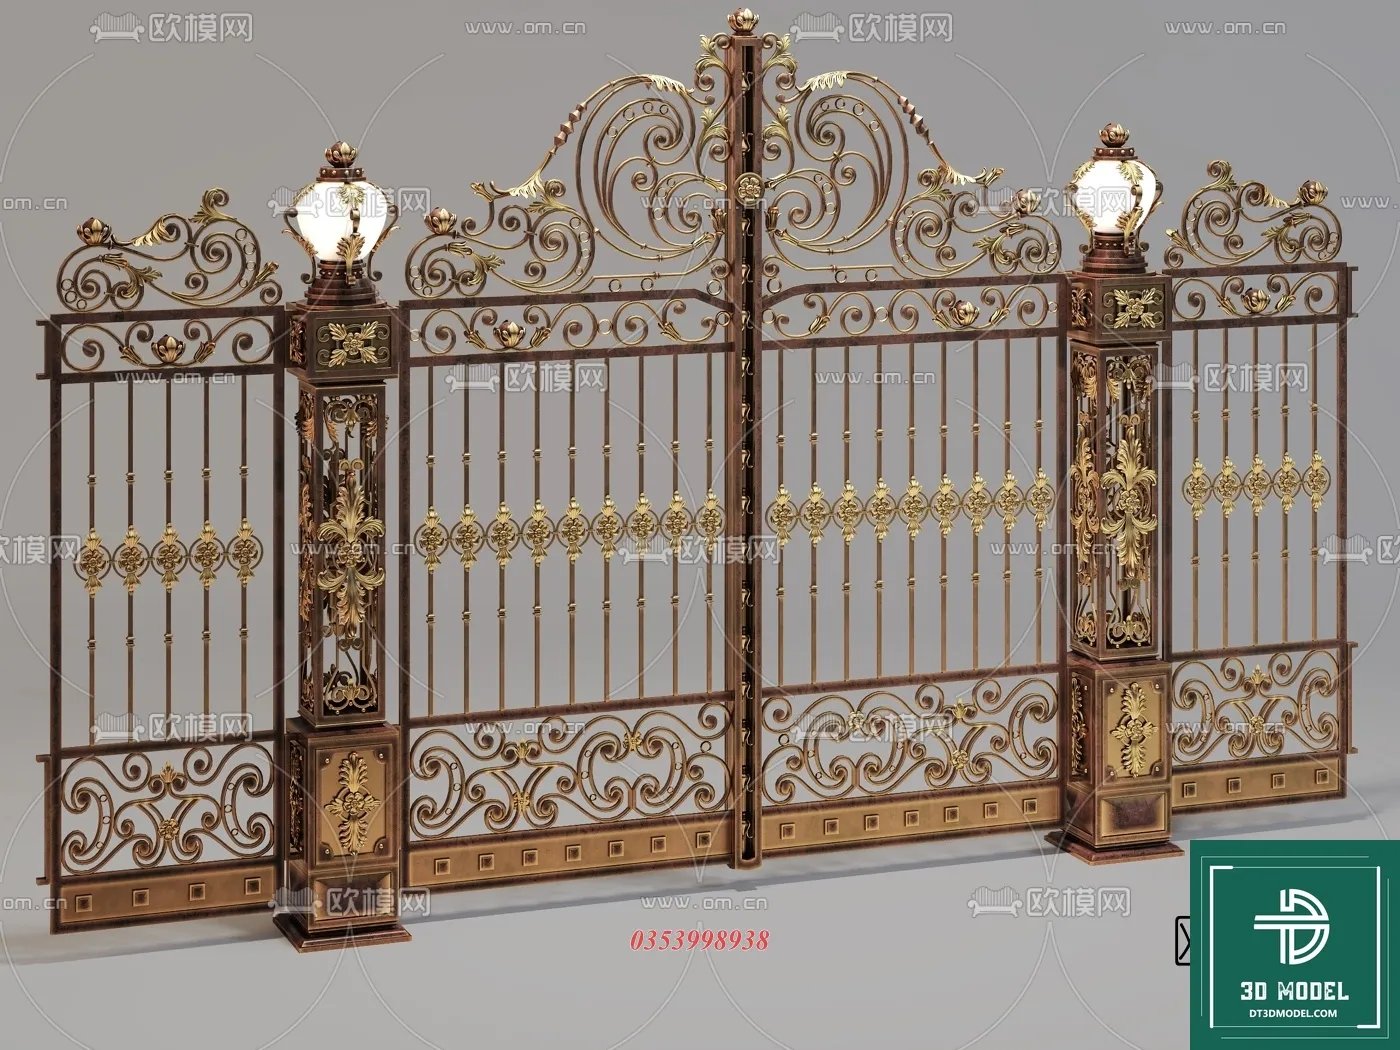 CLASSIC GATE – 3D MODELS – 056